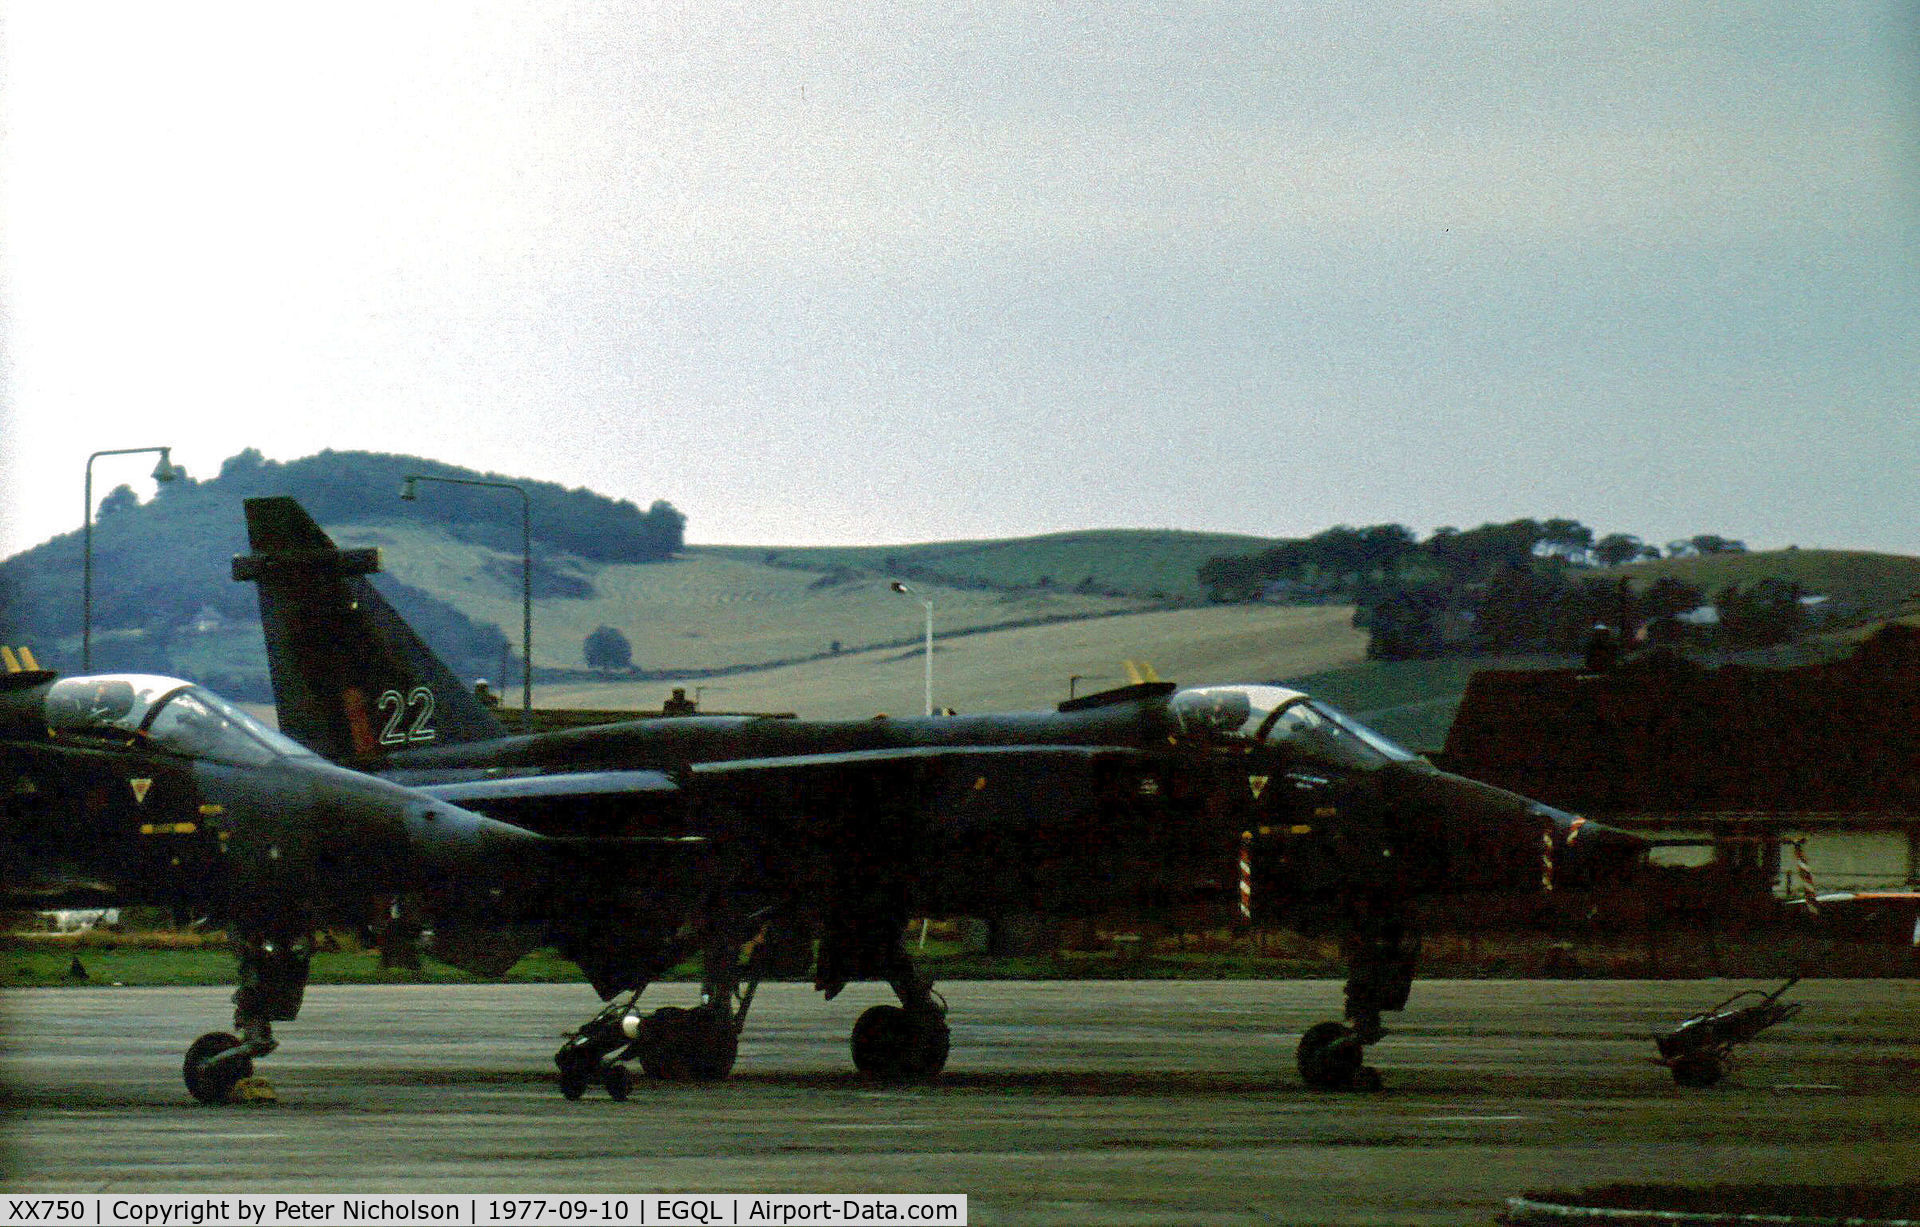 XX750, 1975 Sepecat Jaguar GR.1 C/N S.47, Jaguar GR.1 of RAF Lossiemouth's 226 Operational Conversion Unit on display at the 1977 RAF Leuchars Airshow.